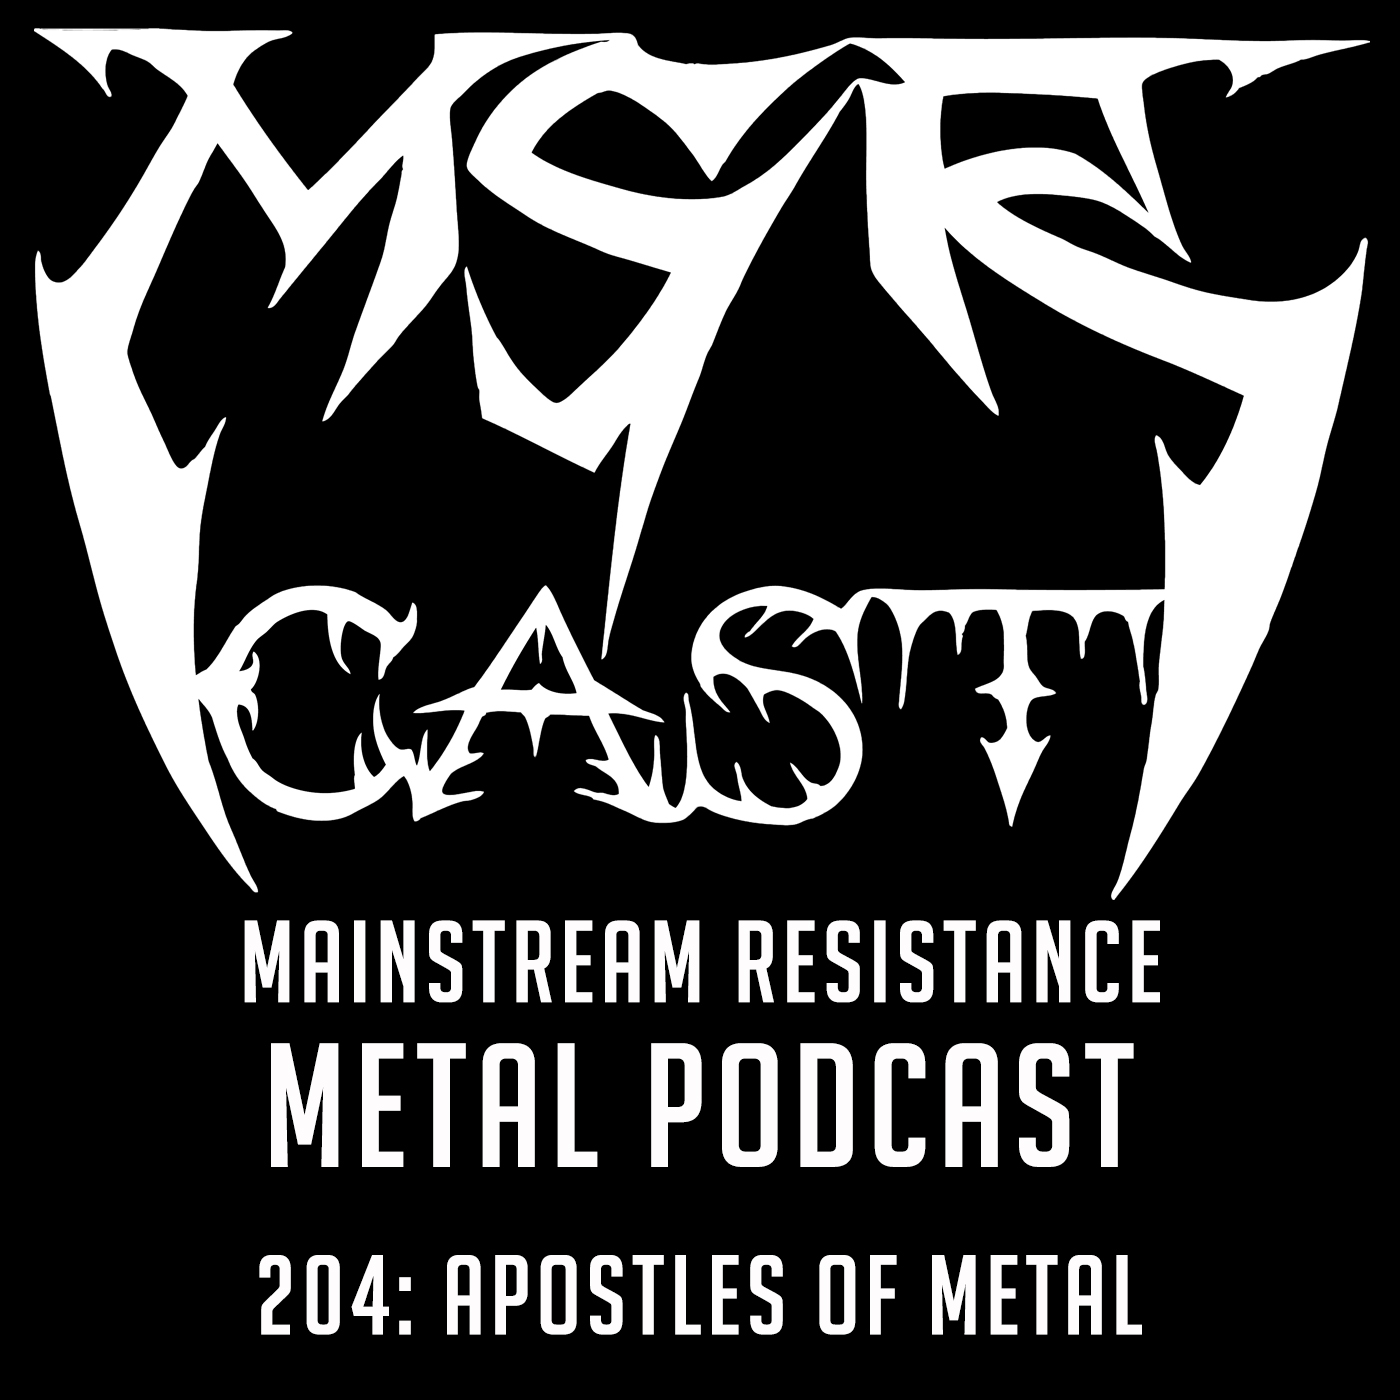 MSRcast 204: Apostles Of Metal